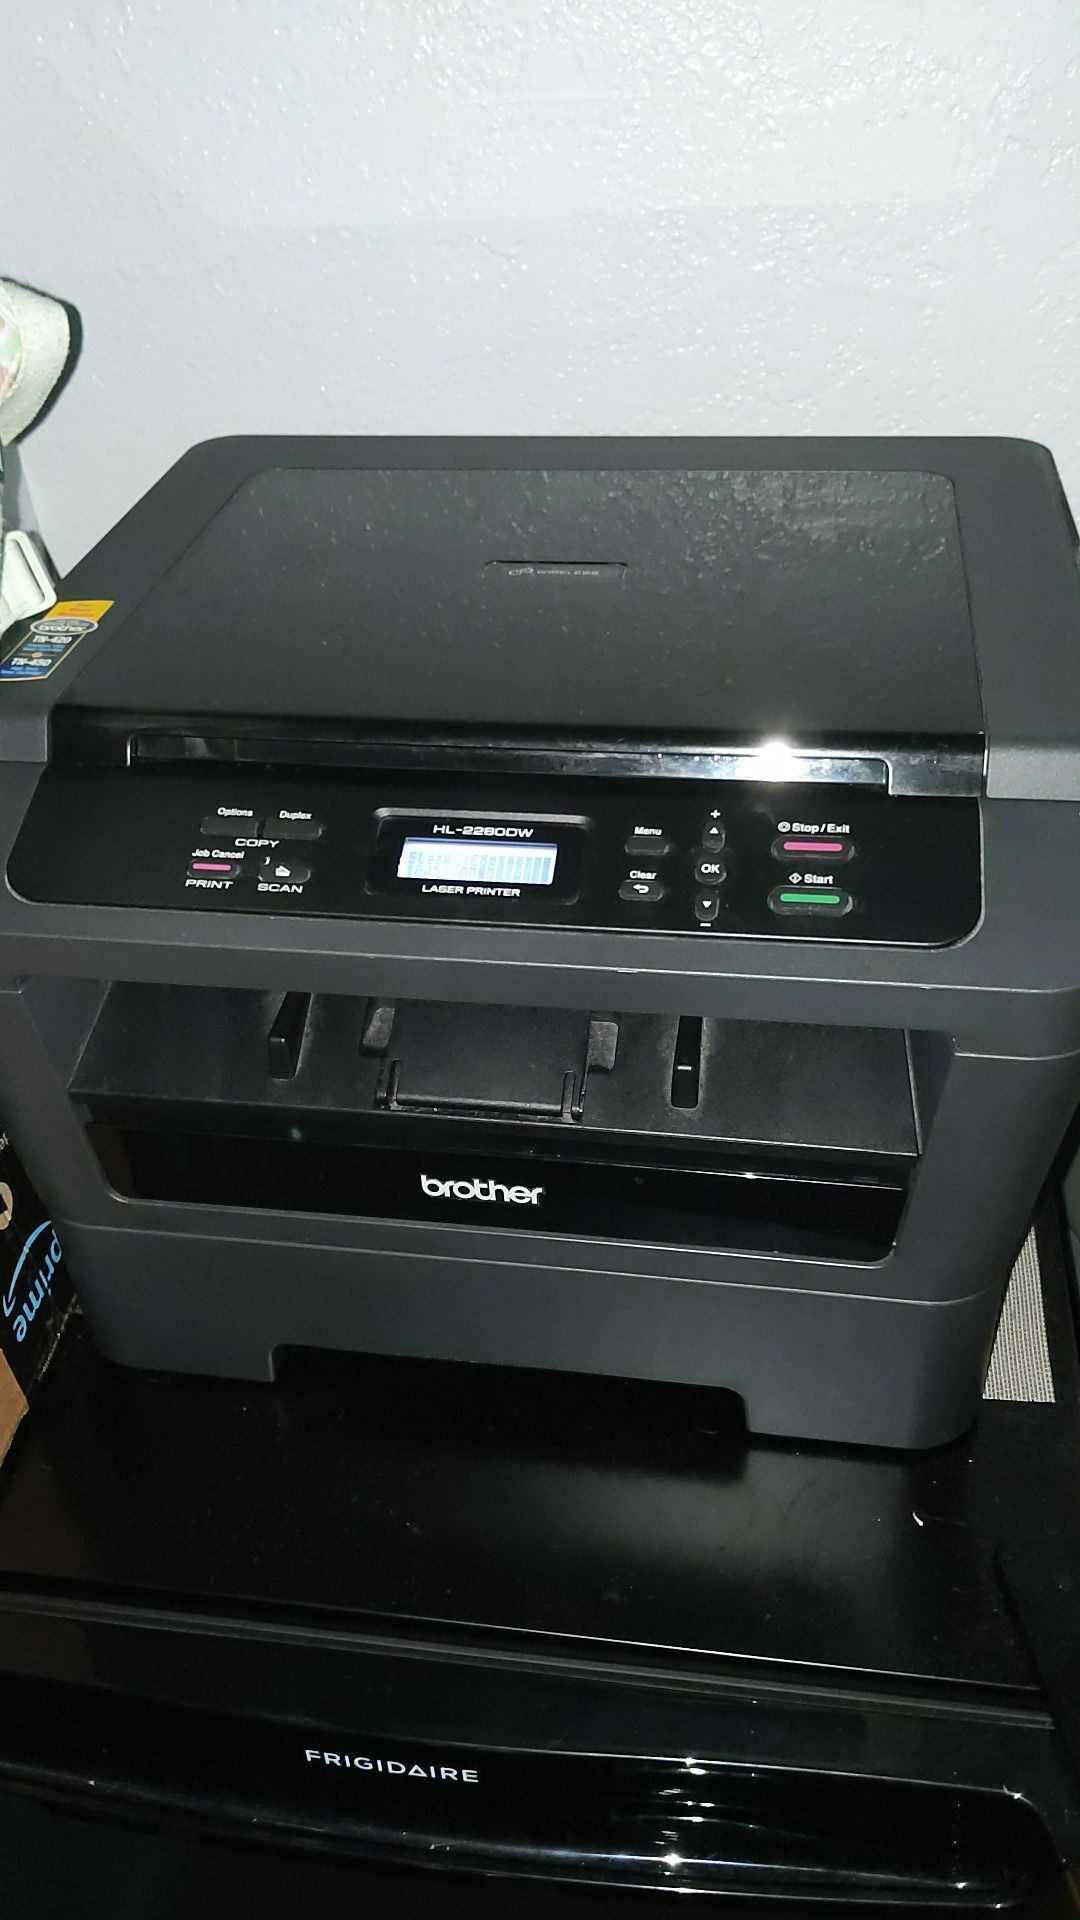 Brother laser multifunction printer